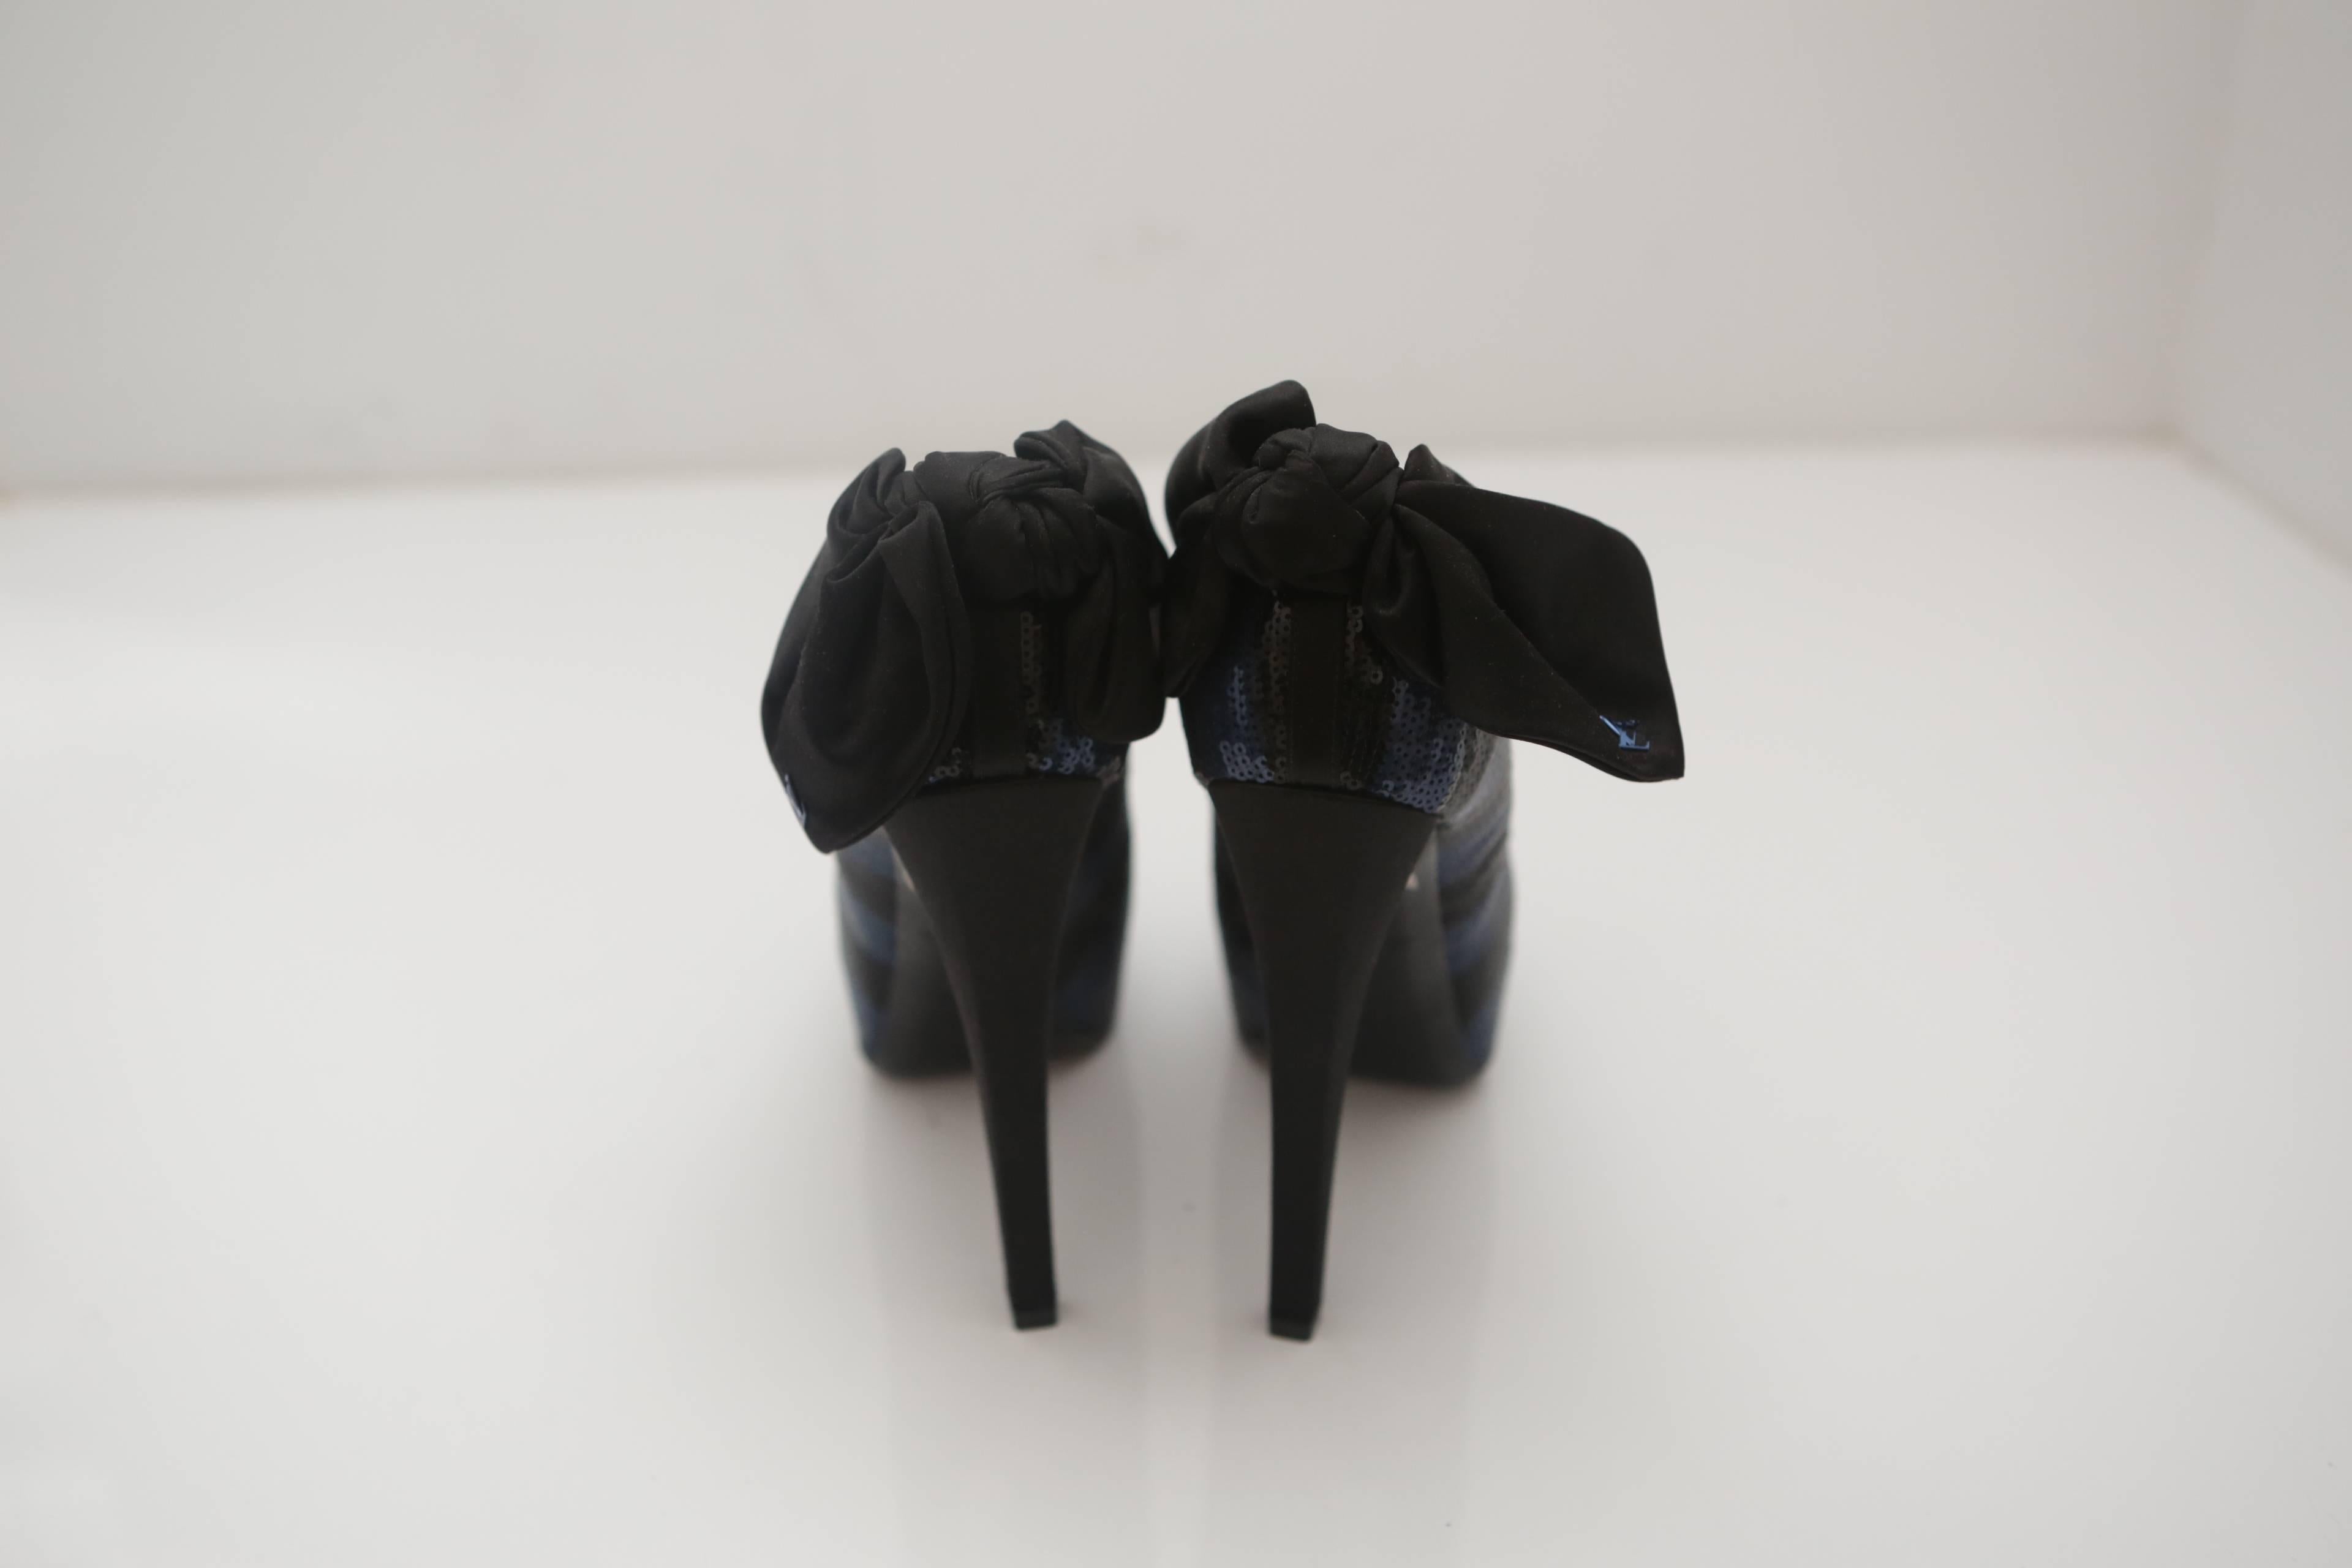 Louis Vuitton 6" peep-toe platform sequin pumps with black bow with "LV" monogram.